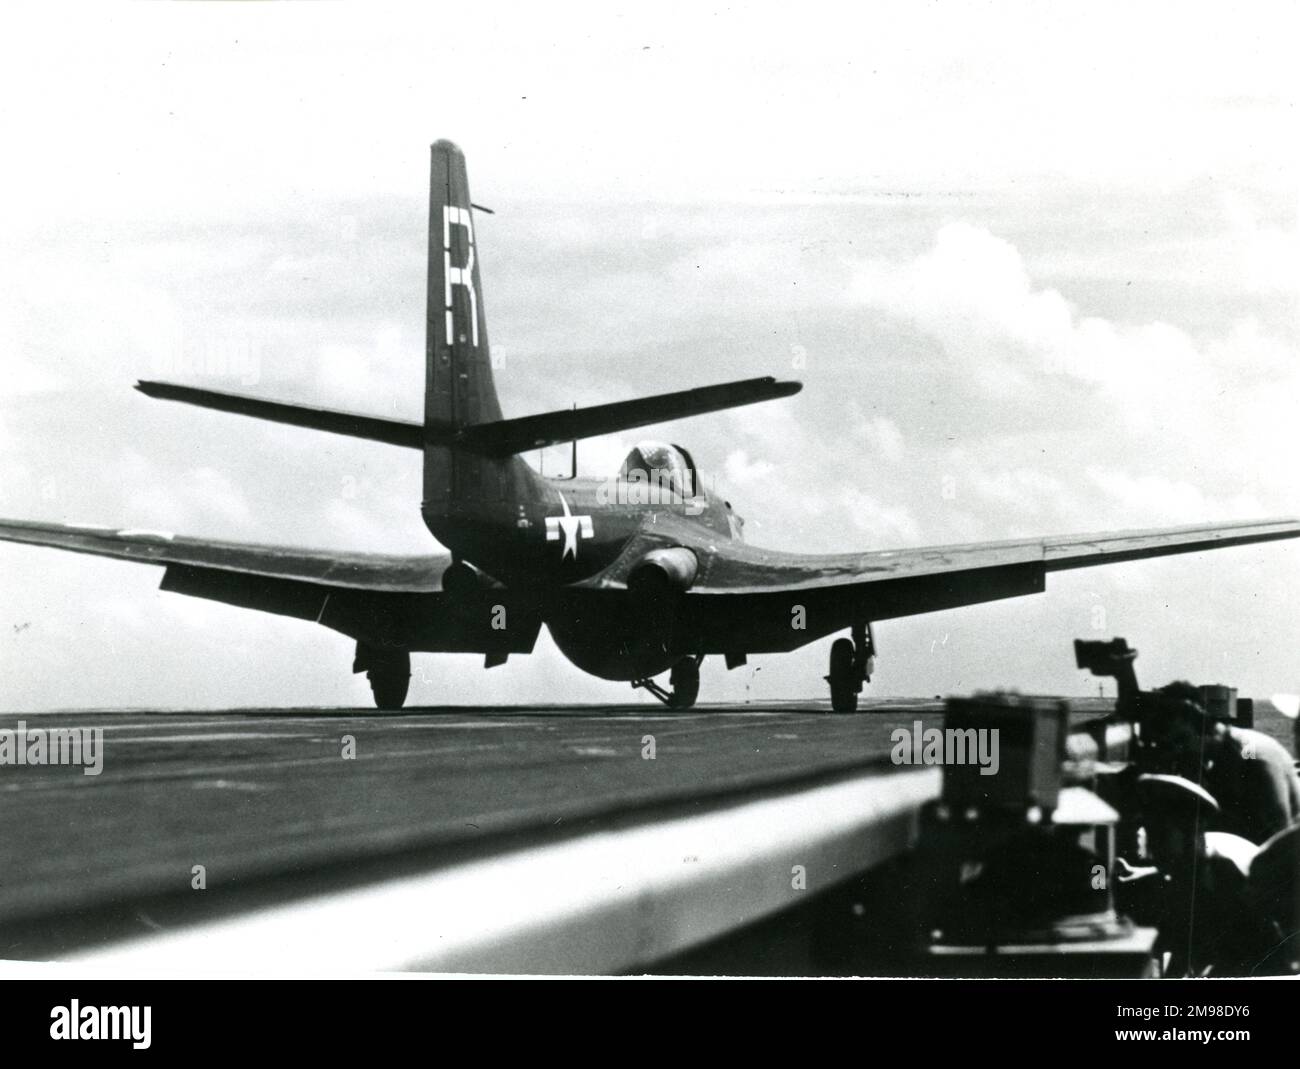 McDonnell FH-1 Phantom landet an Bord eines Flugzeugträgers. Stockfoto